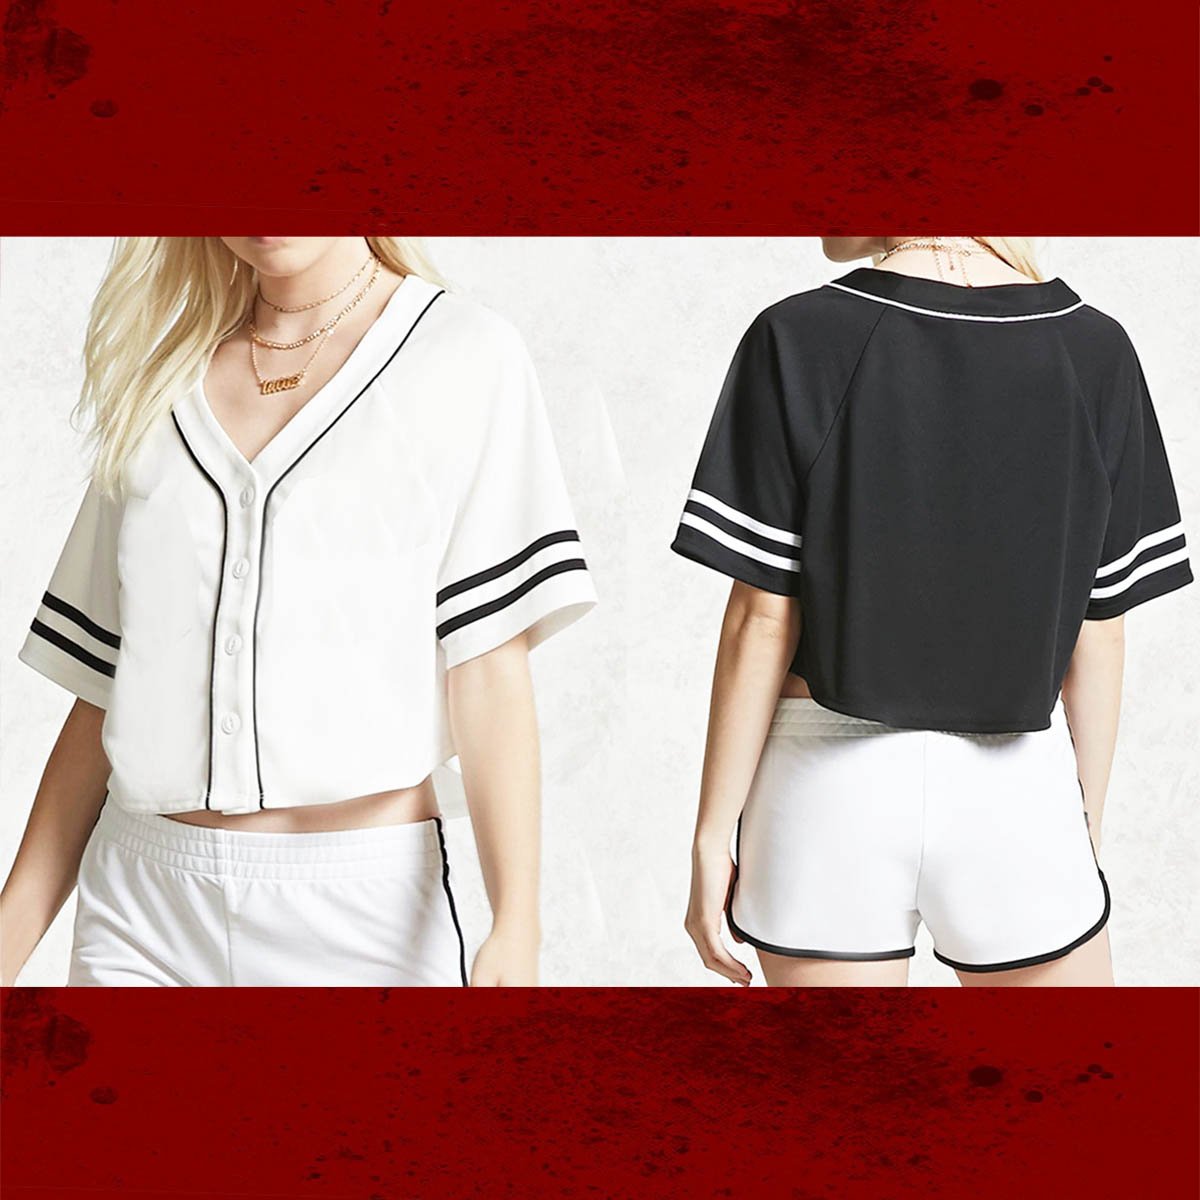 Source women'S crop top baseball jersey - black white stripe Jersey Shirt  Baseball tee shirt on m.